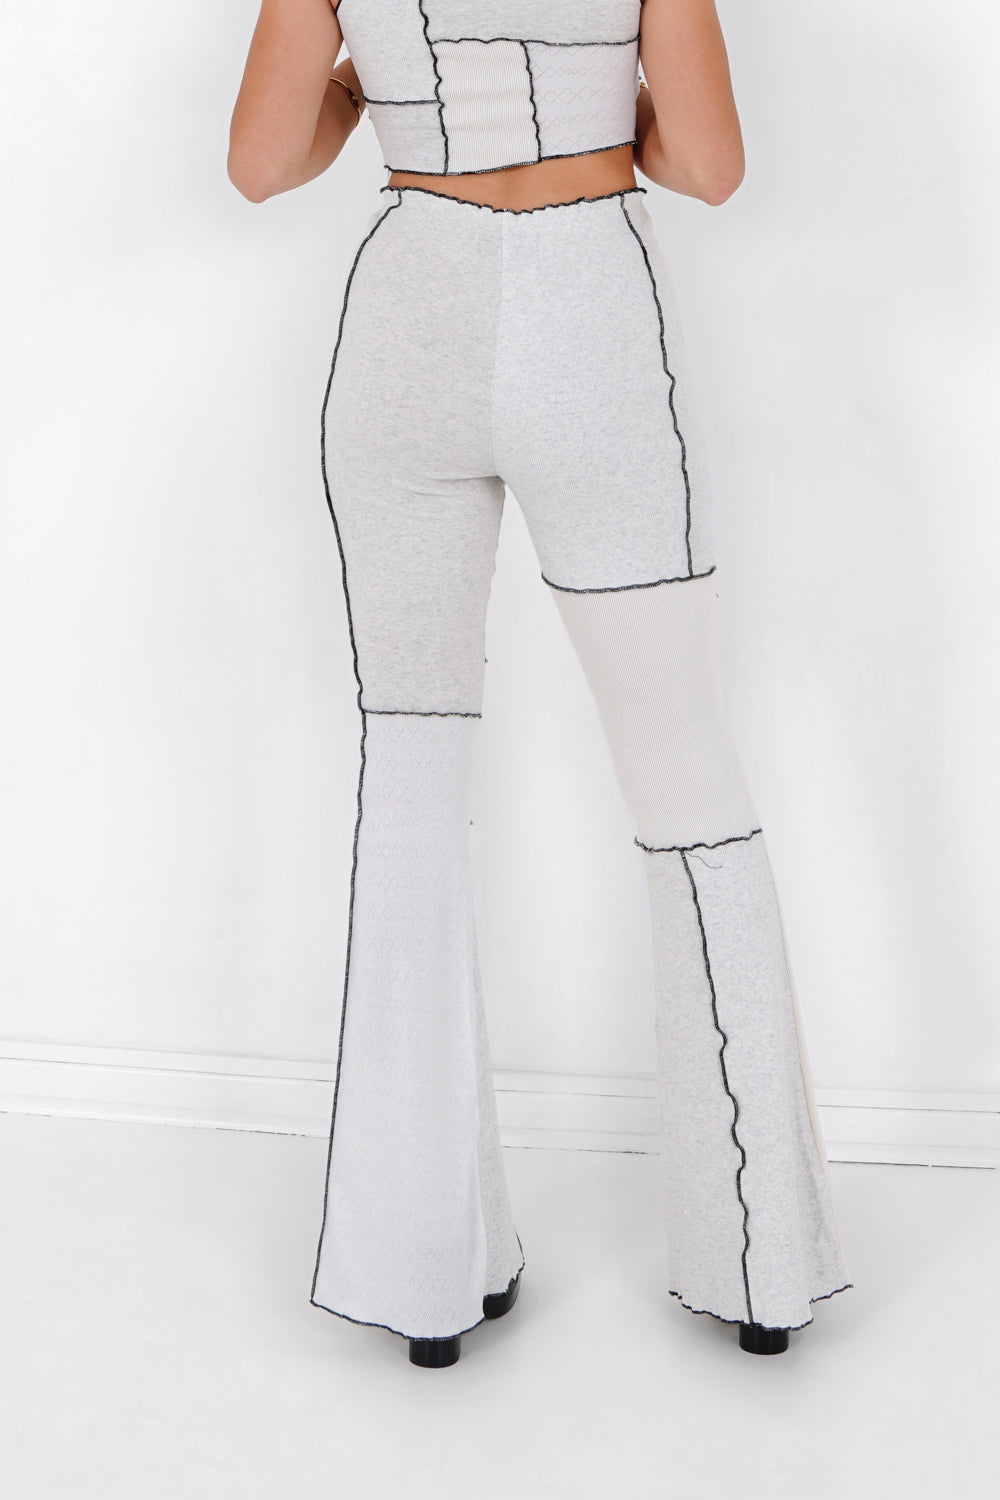 Sixth June - Pantalon flare multi tissus Blanc